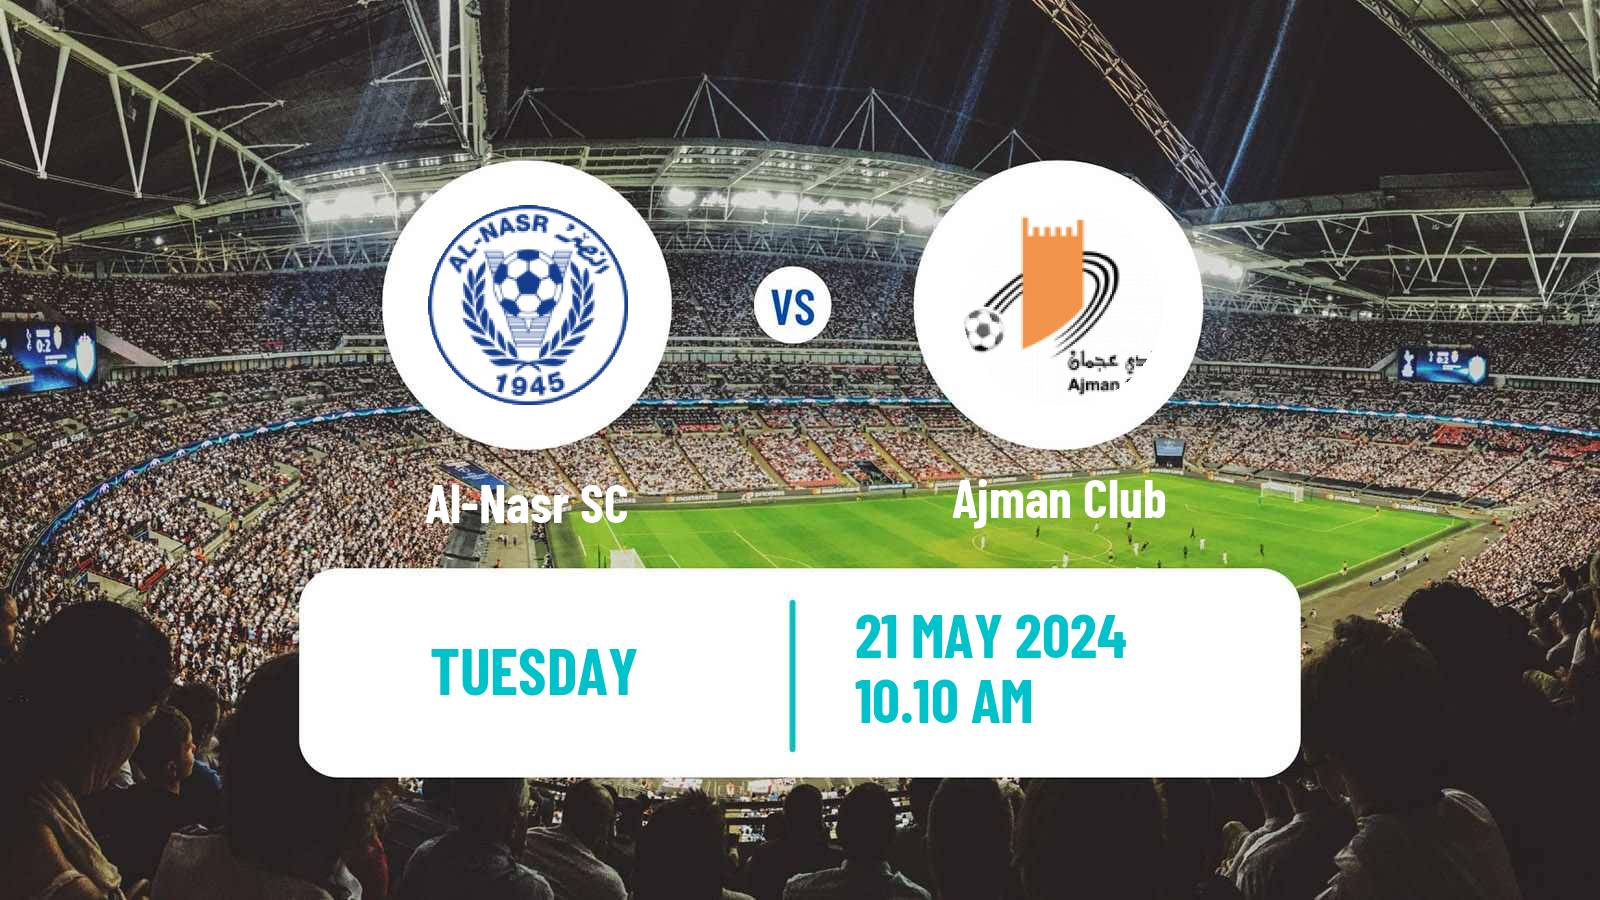 Soccer UAE Football League Al-Nasr - Ajman Club